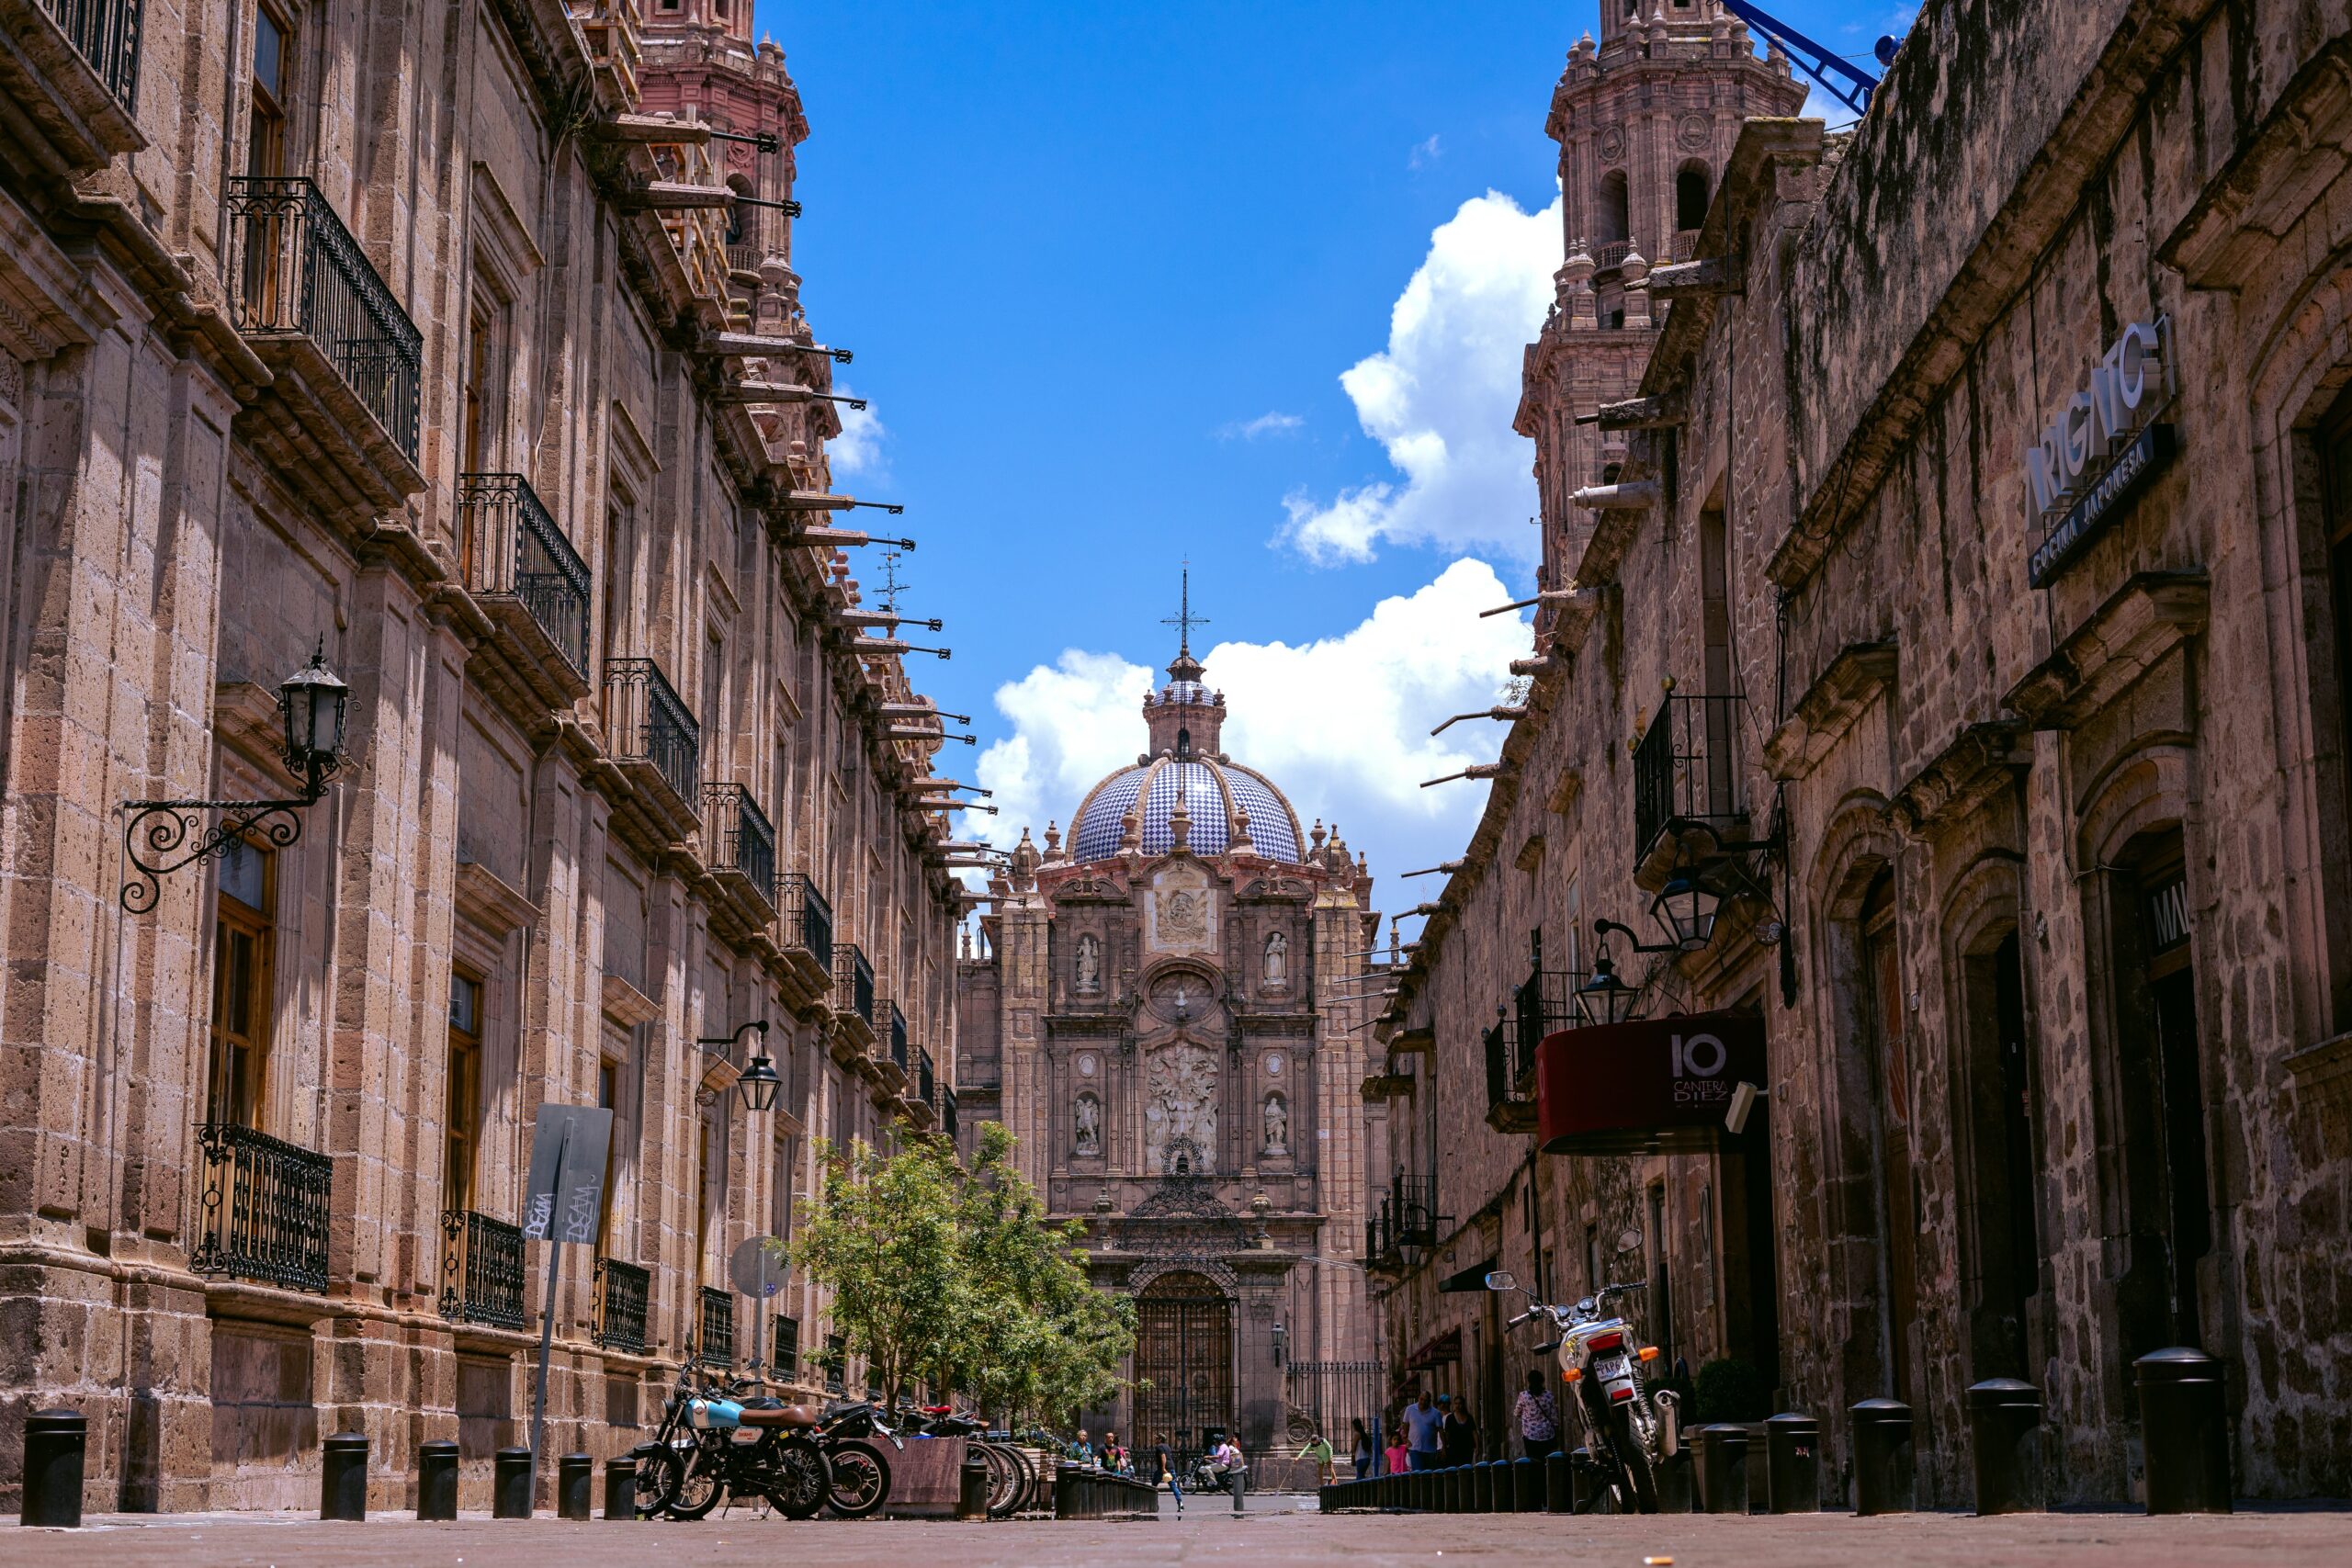 Catedral de Morelia, Morelia, Mexico